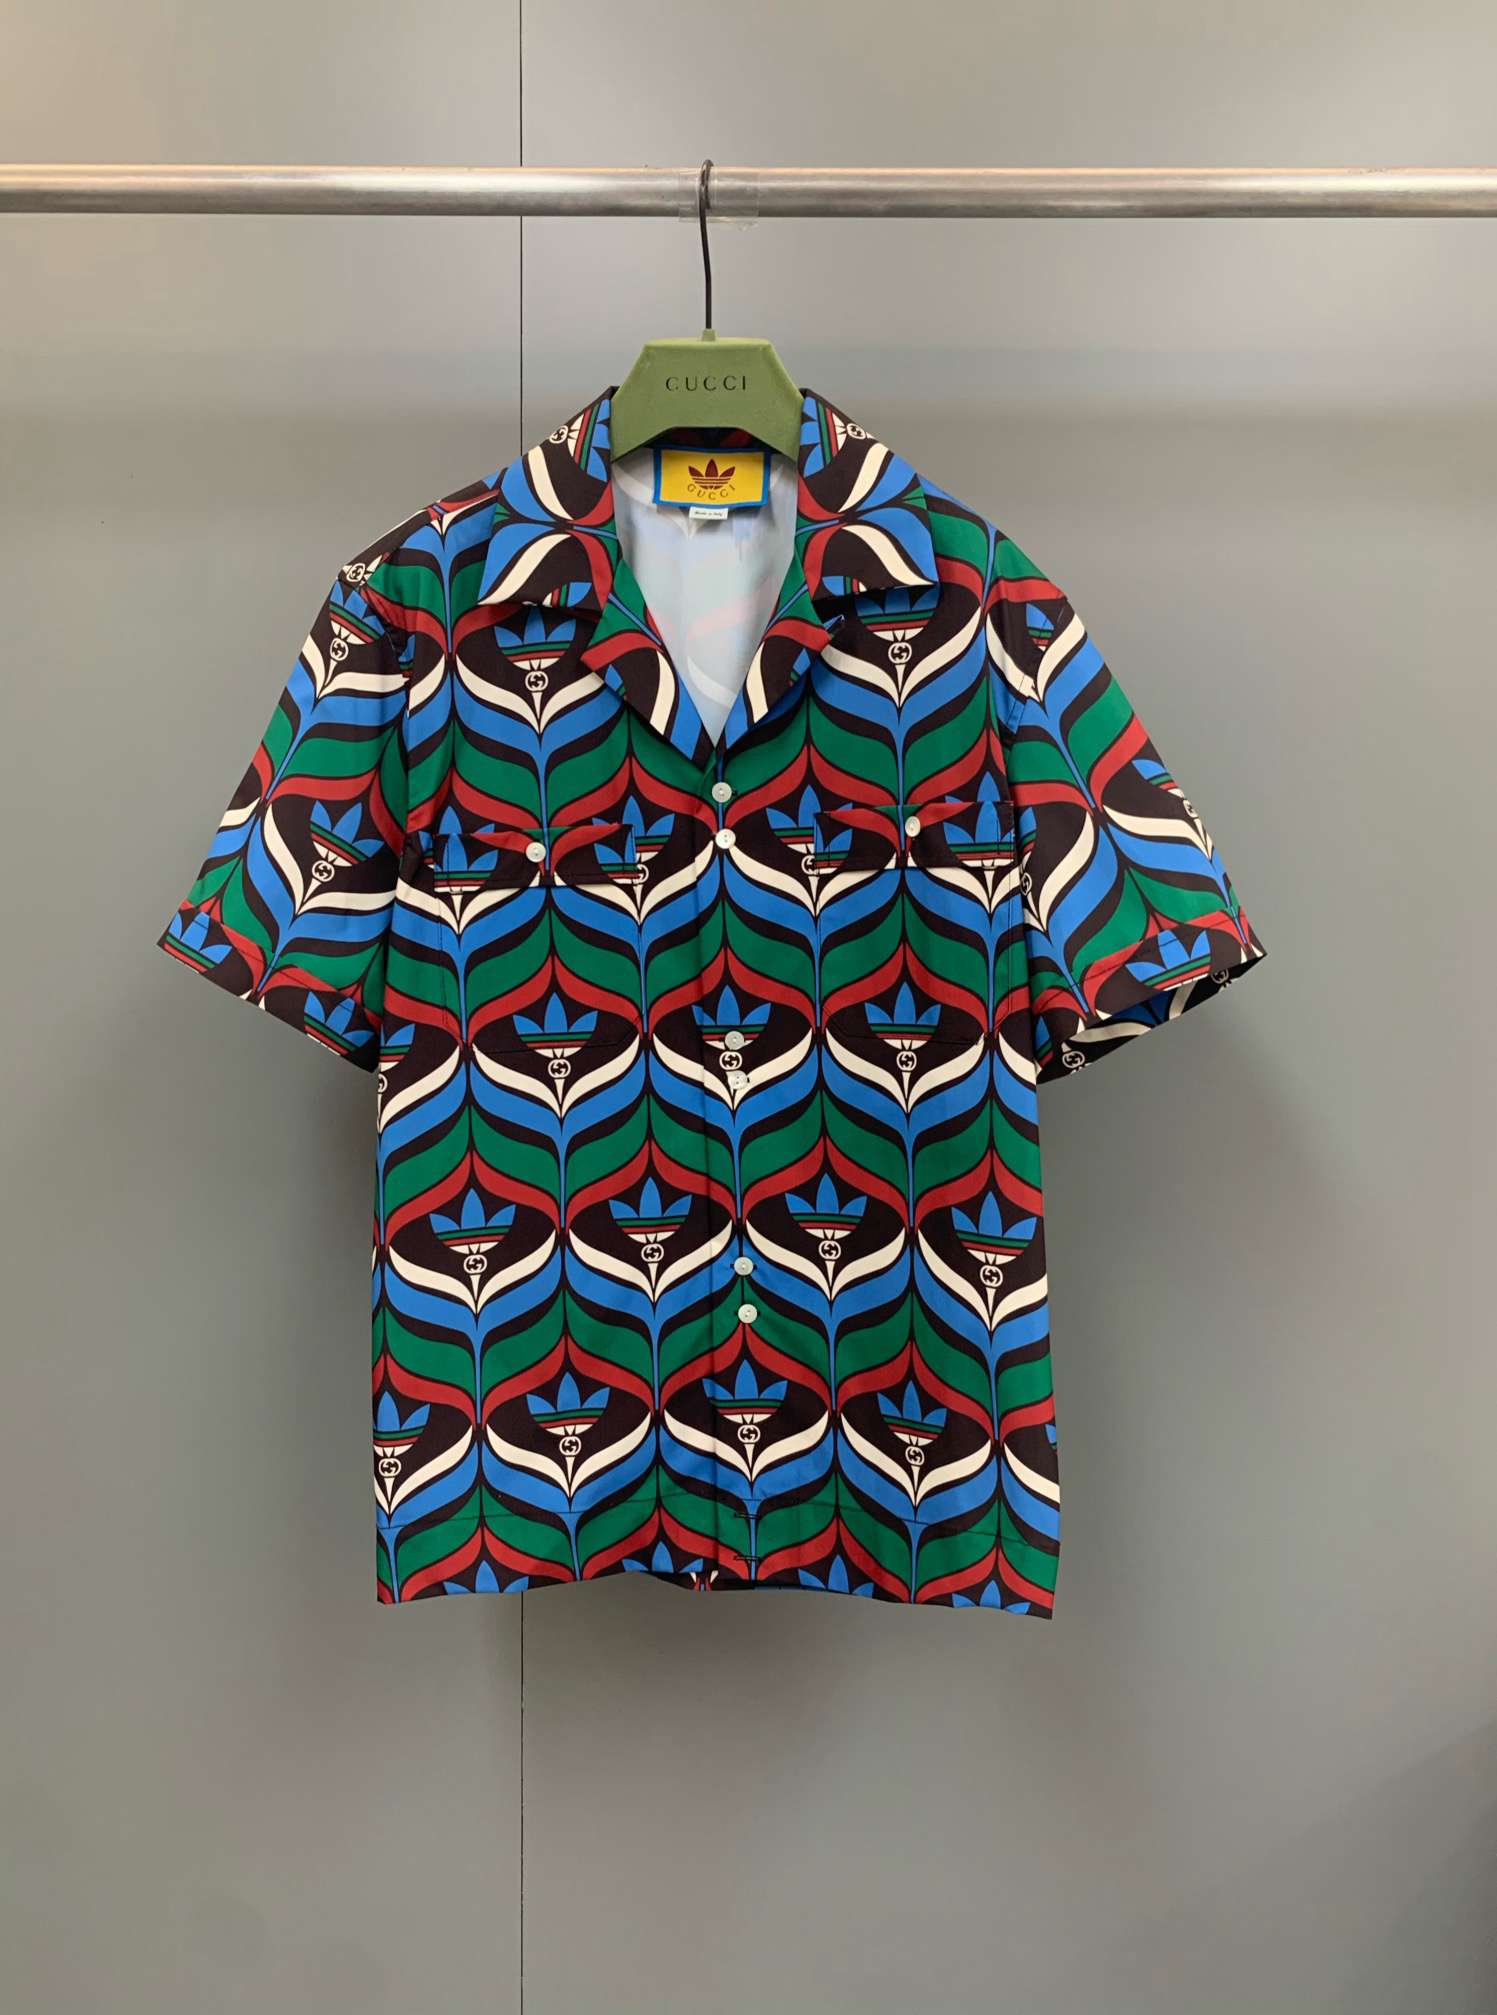 Adidas x Gucci Trefoil Collaboration Sport Tshirt Summer Bowling Tees